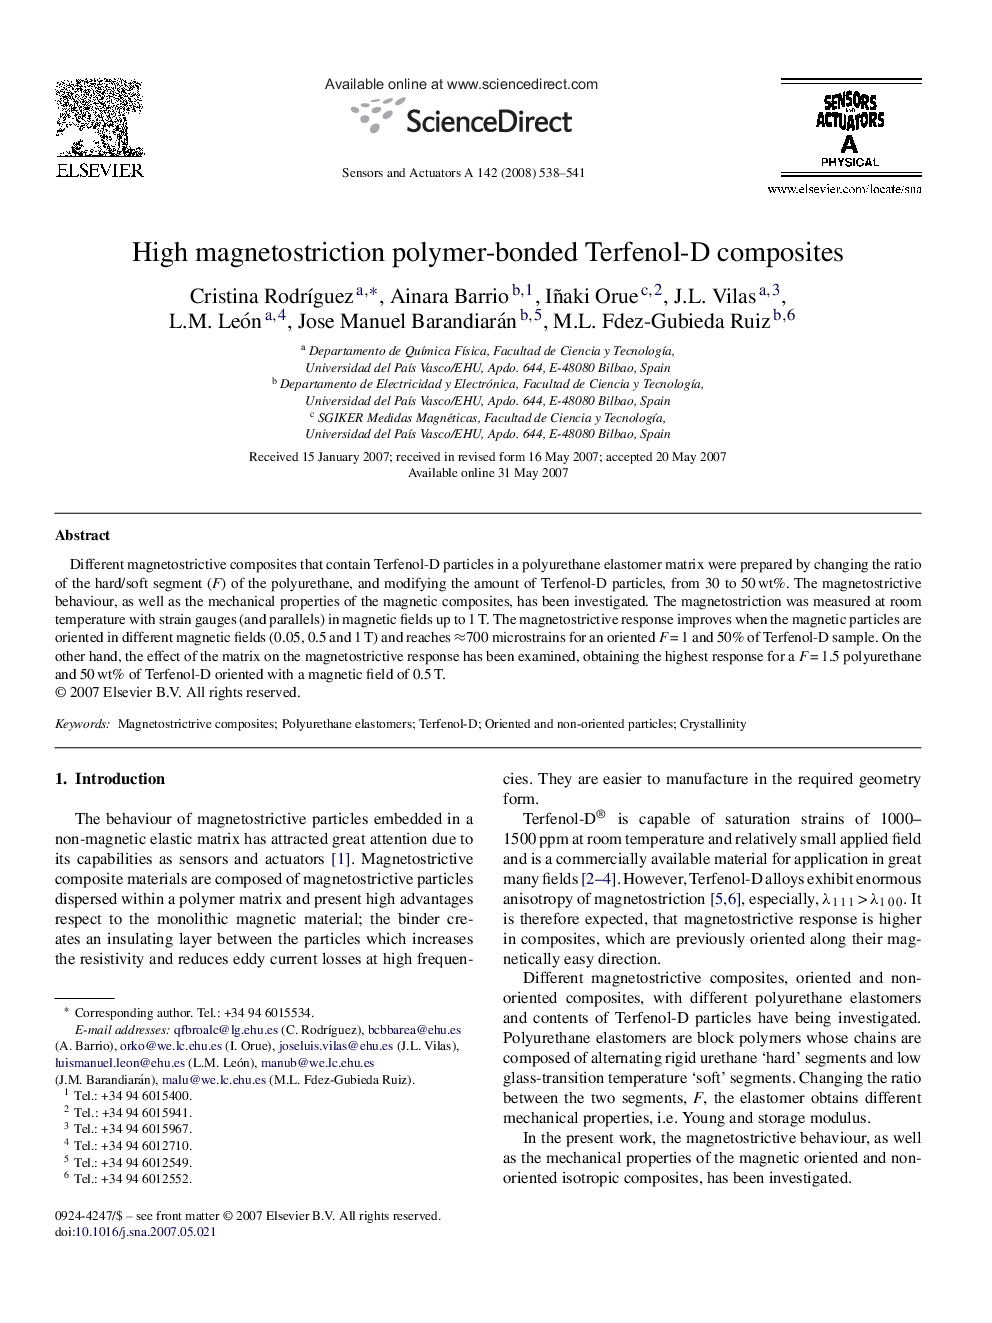 High magnetostriction polymer-bonded Terfenol-D composites